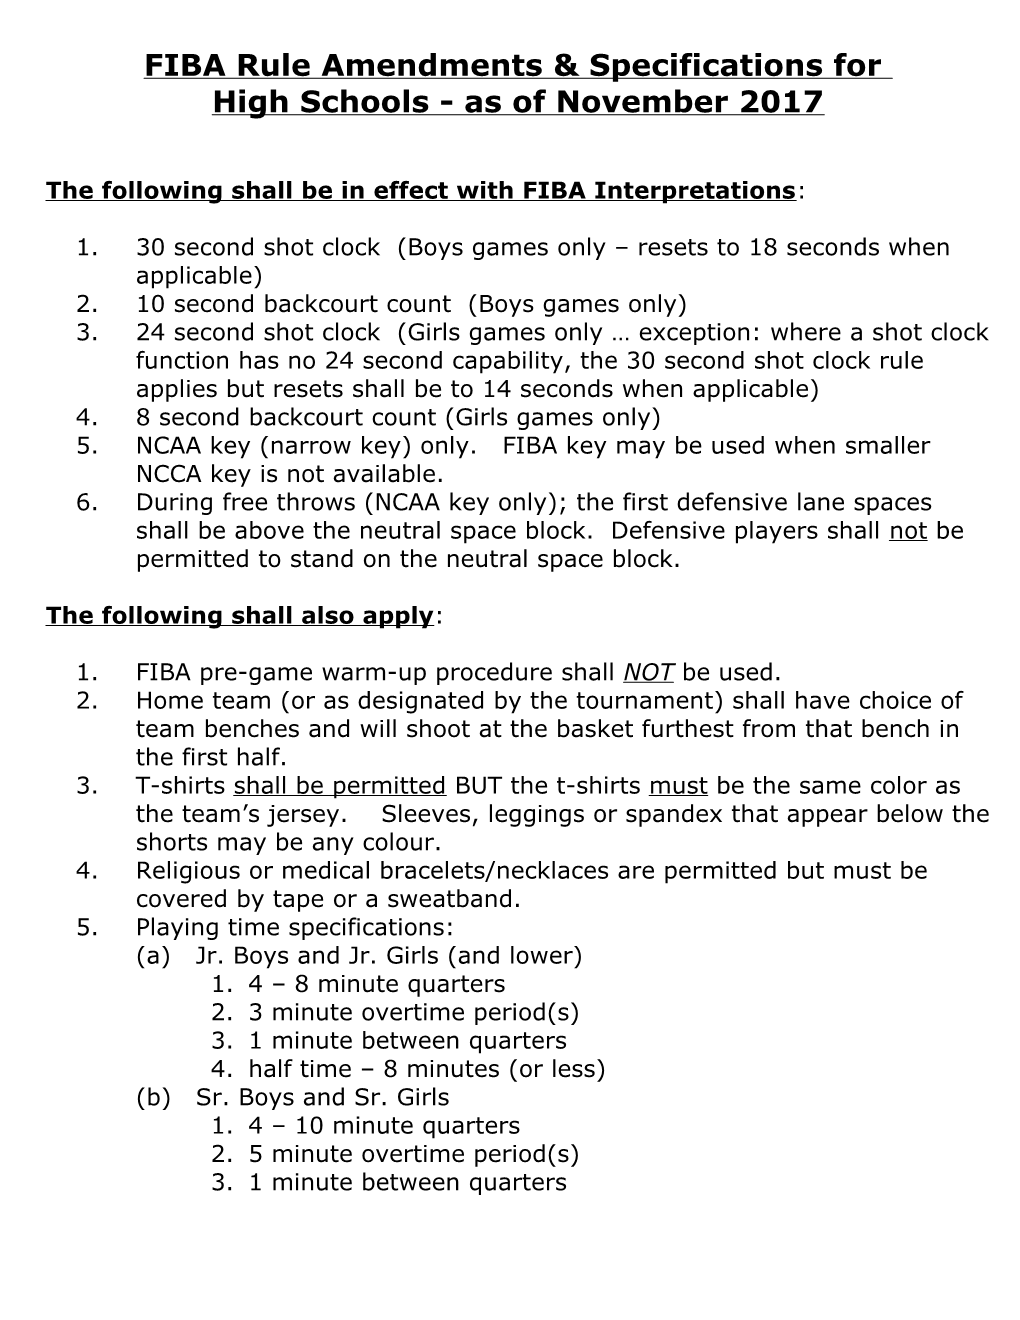 FIBA Rule Amendments & Specifications For